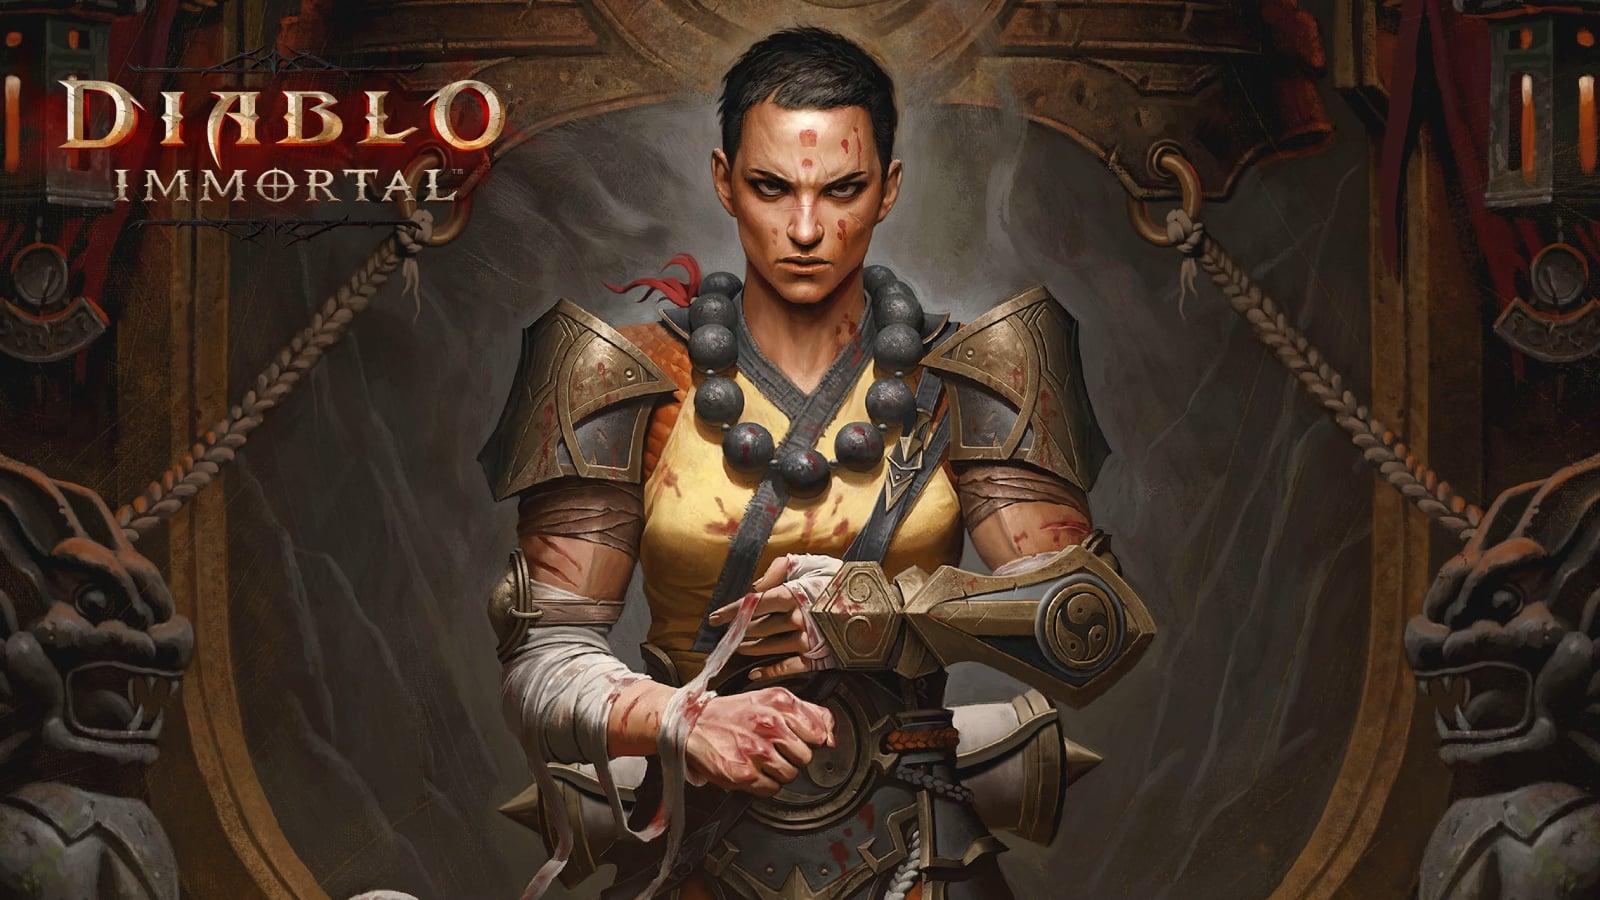 Diablo Immortal: All Classes Tier List